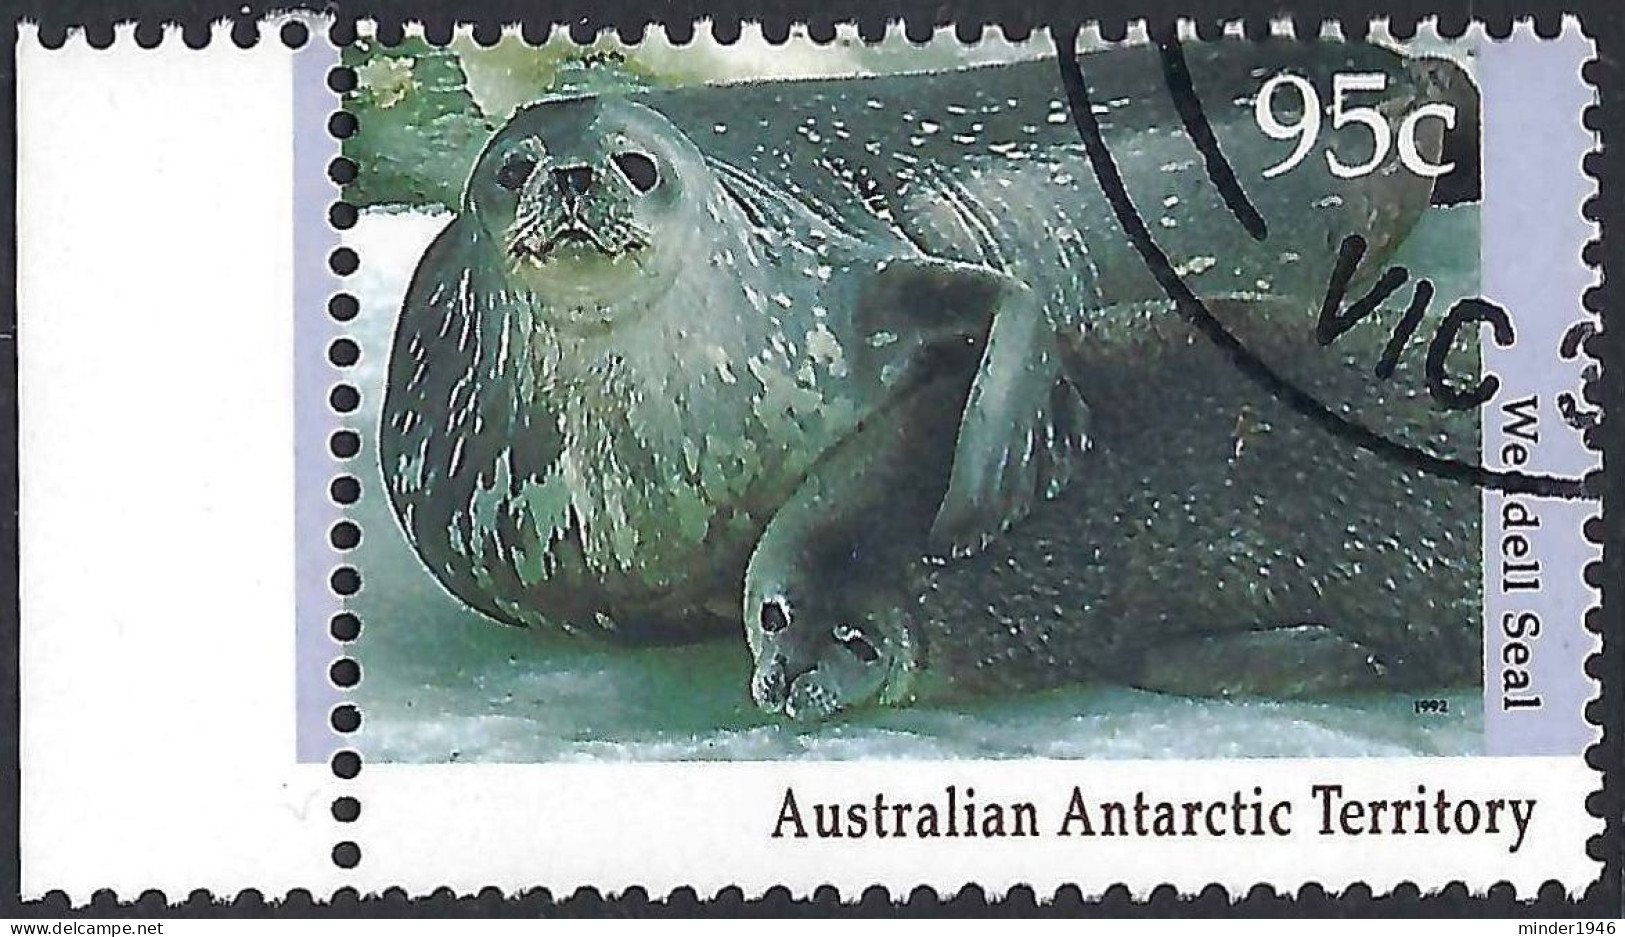 AUSTRALIAN ANTARCTIC TERRITORY (AAT) 1992 QEII 95c Multicoloured, Wildlife-Weadell Seal FU - Oblitérés